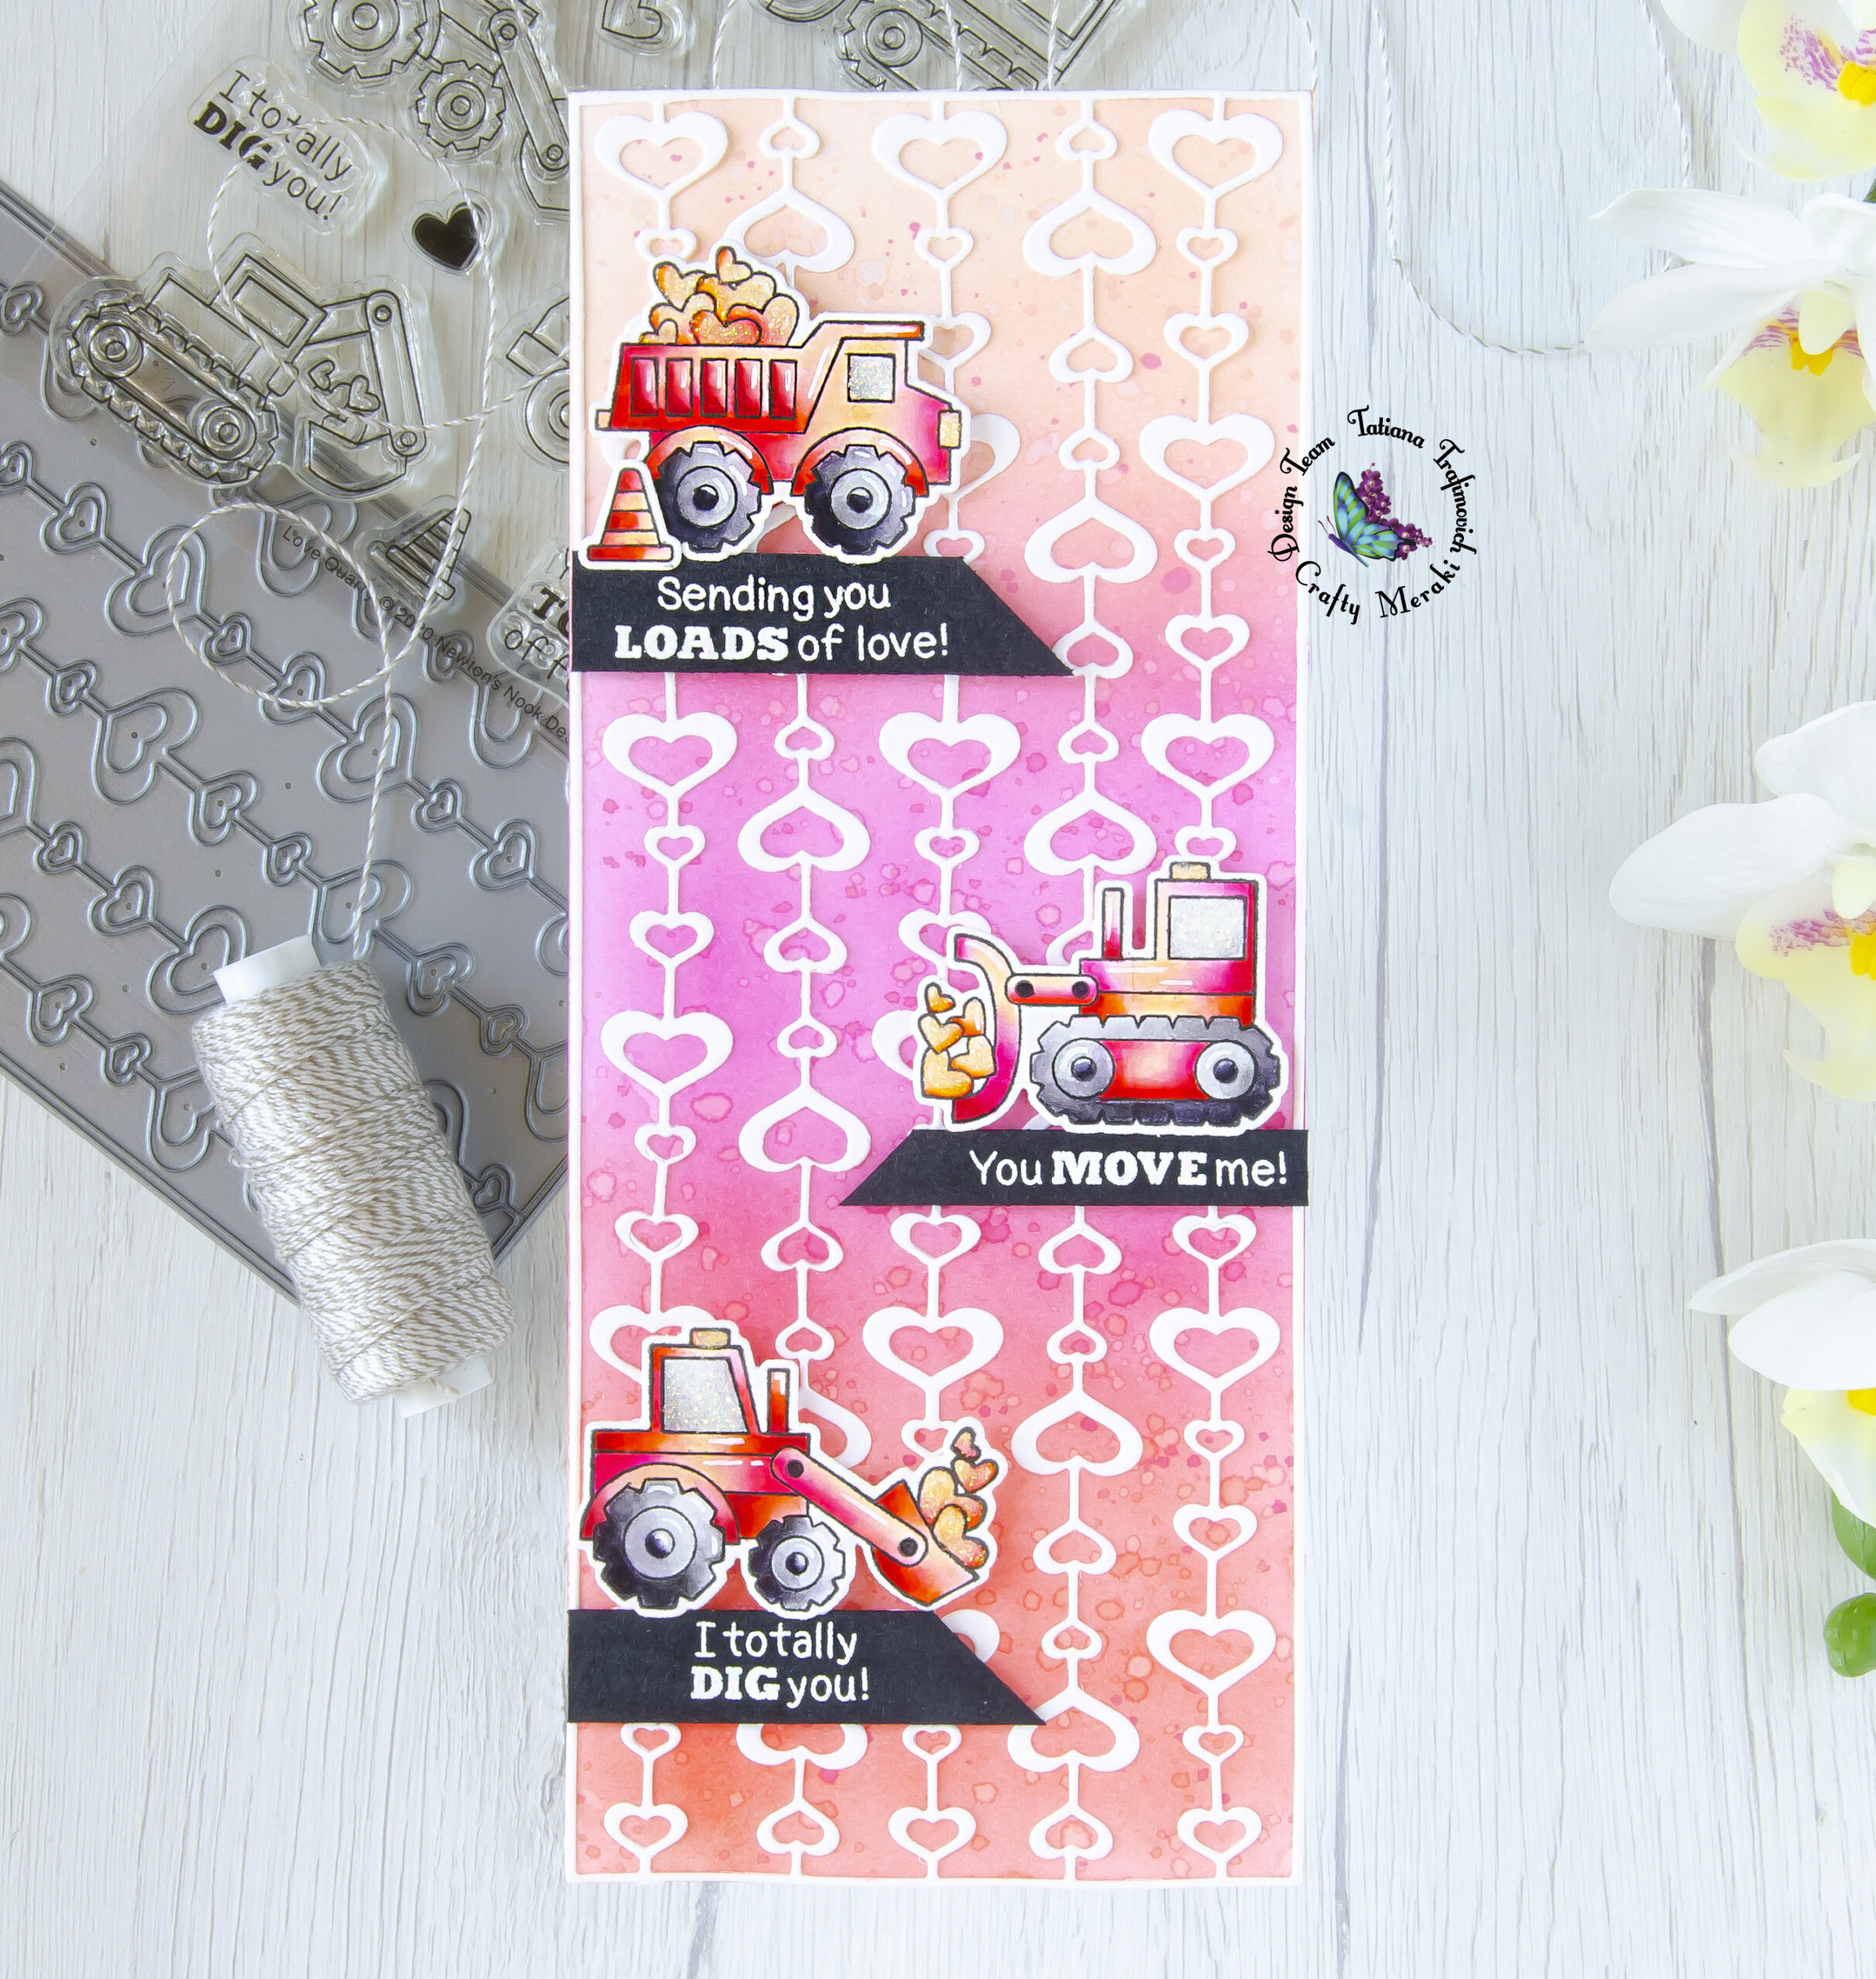 Sending You Loads of Love #handmade card by Tatiana Trafimovich #tatianacraftandart - Live Quarry stamp set by Newton's Nook Designs #newtonsnook and Eccentric Hearts die by Crafty Meraki #craftymeraki